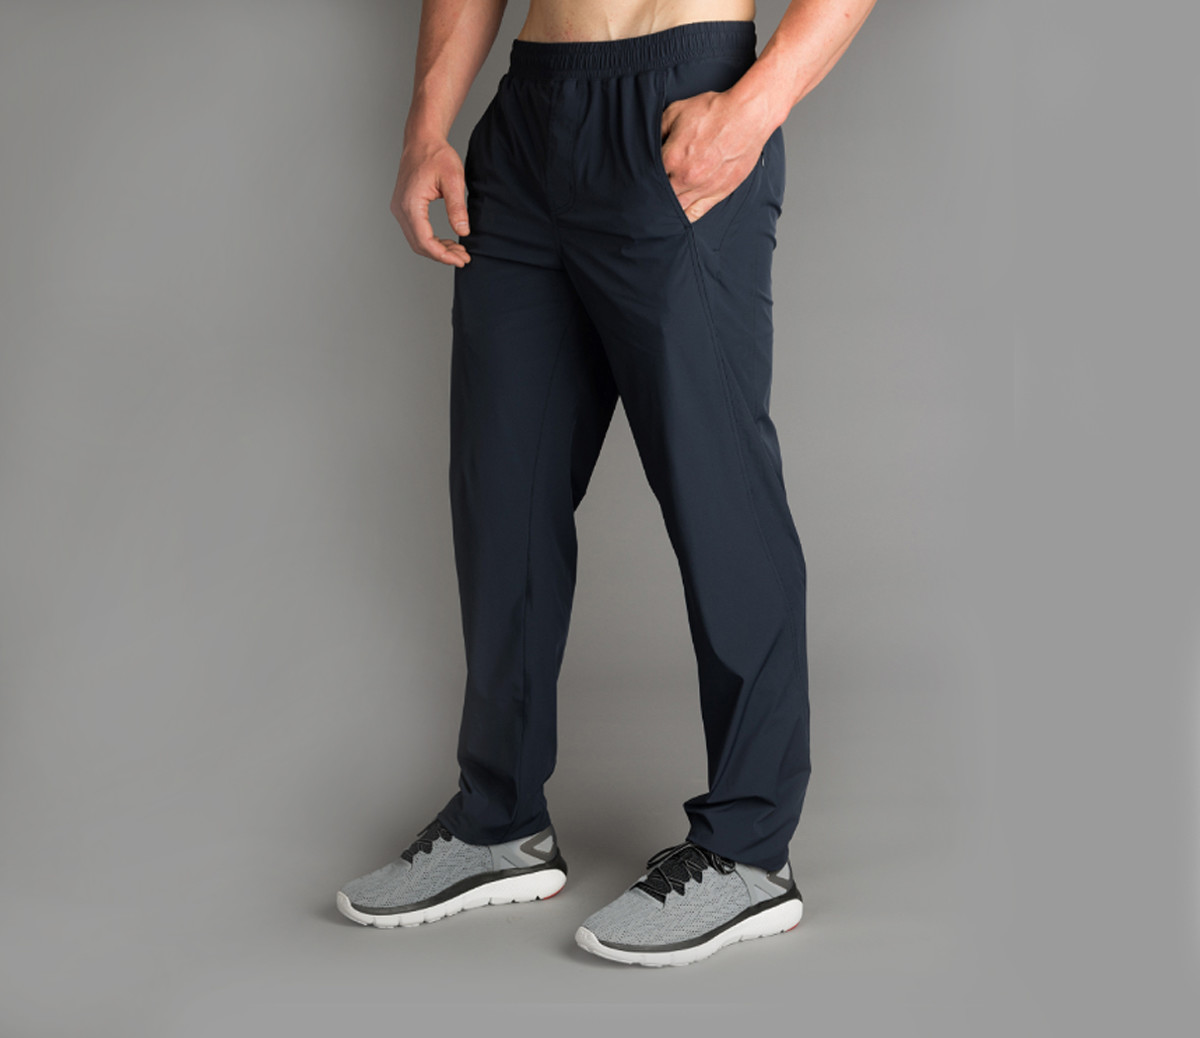 Best Training Pants for Men Available Now - Men's Journal